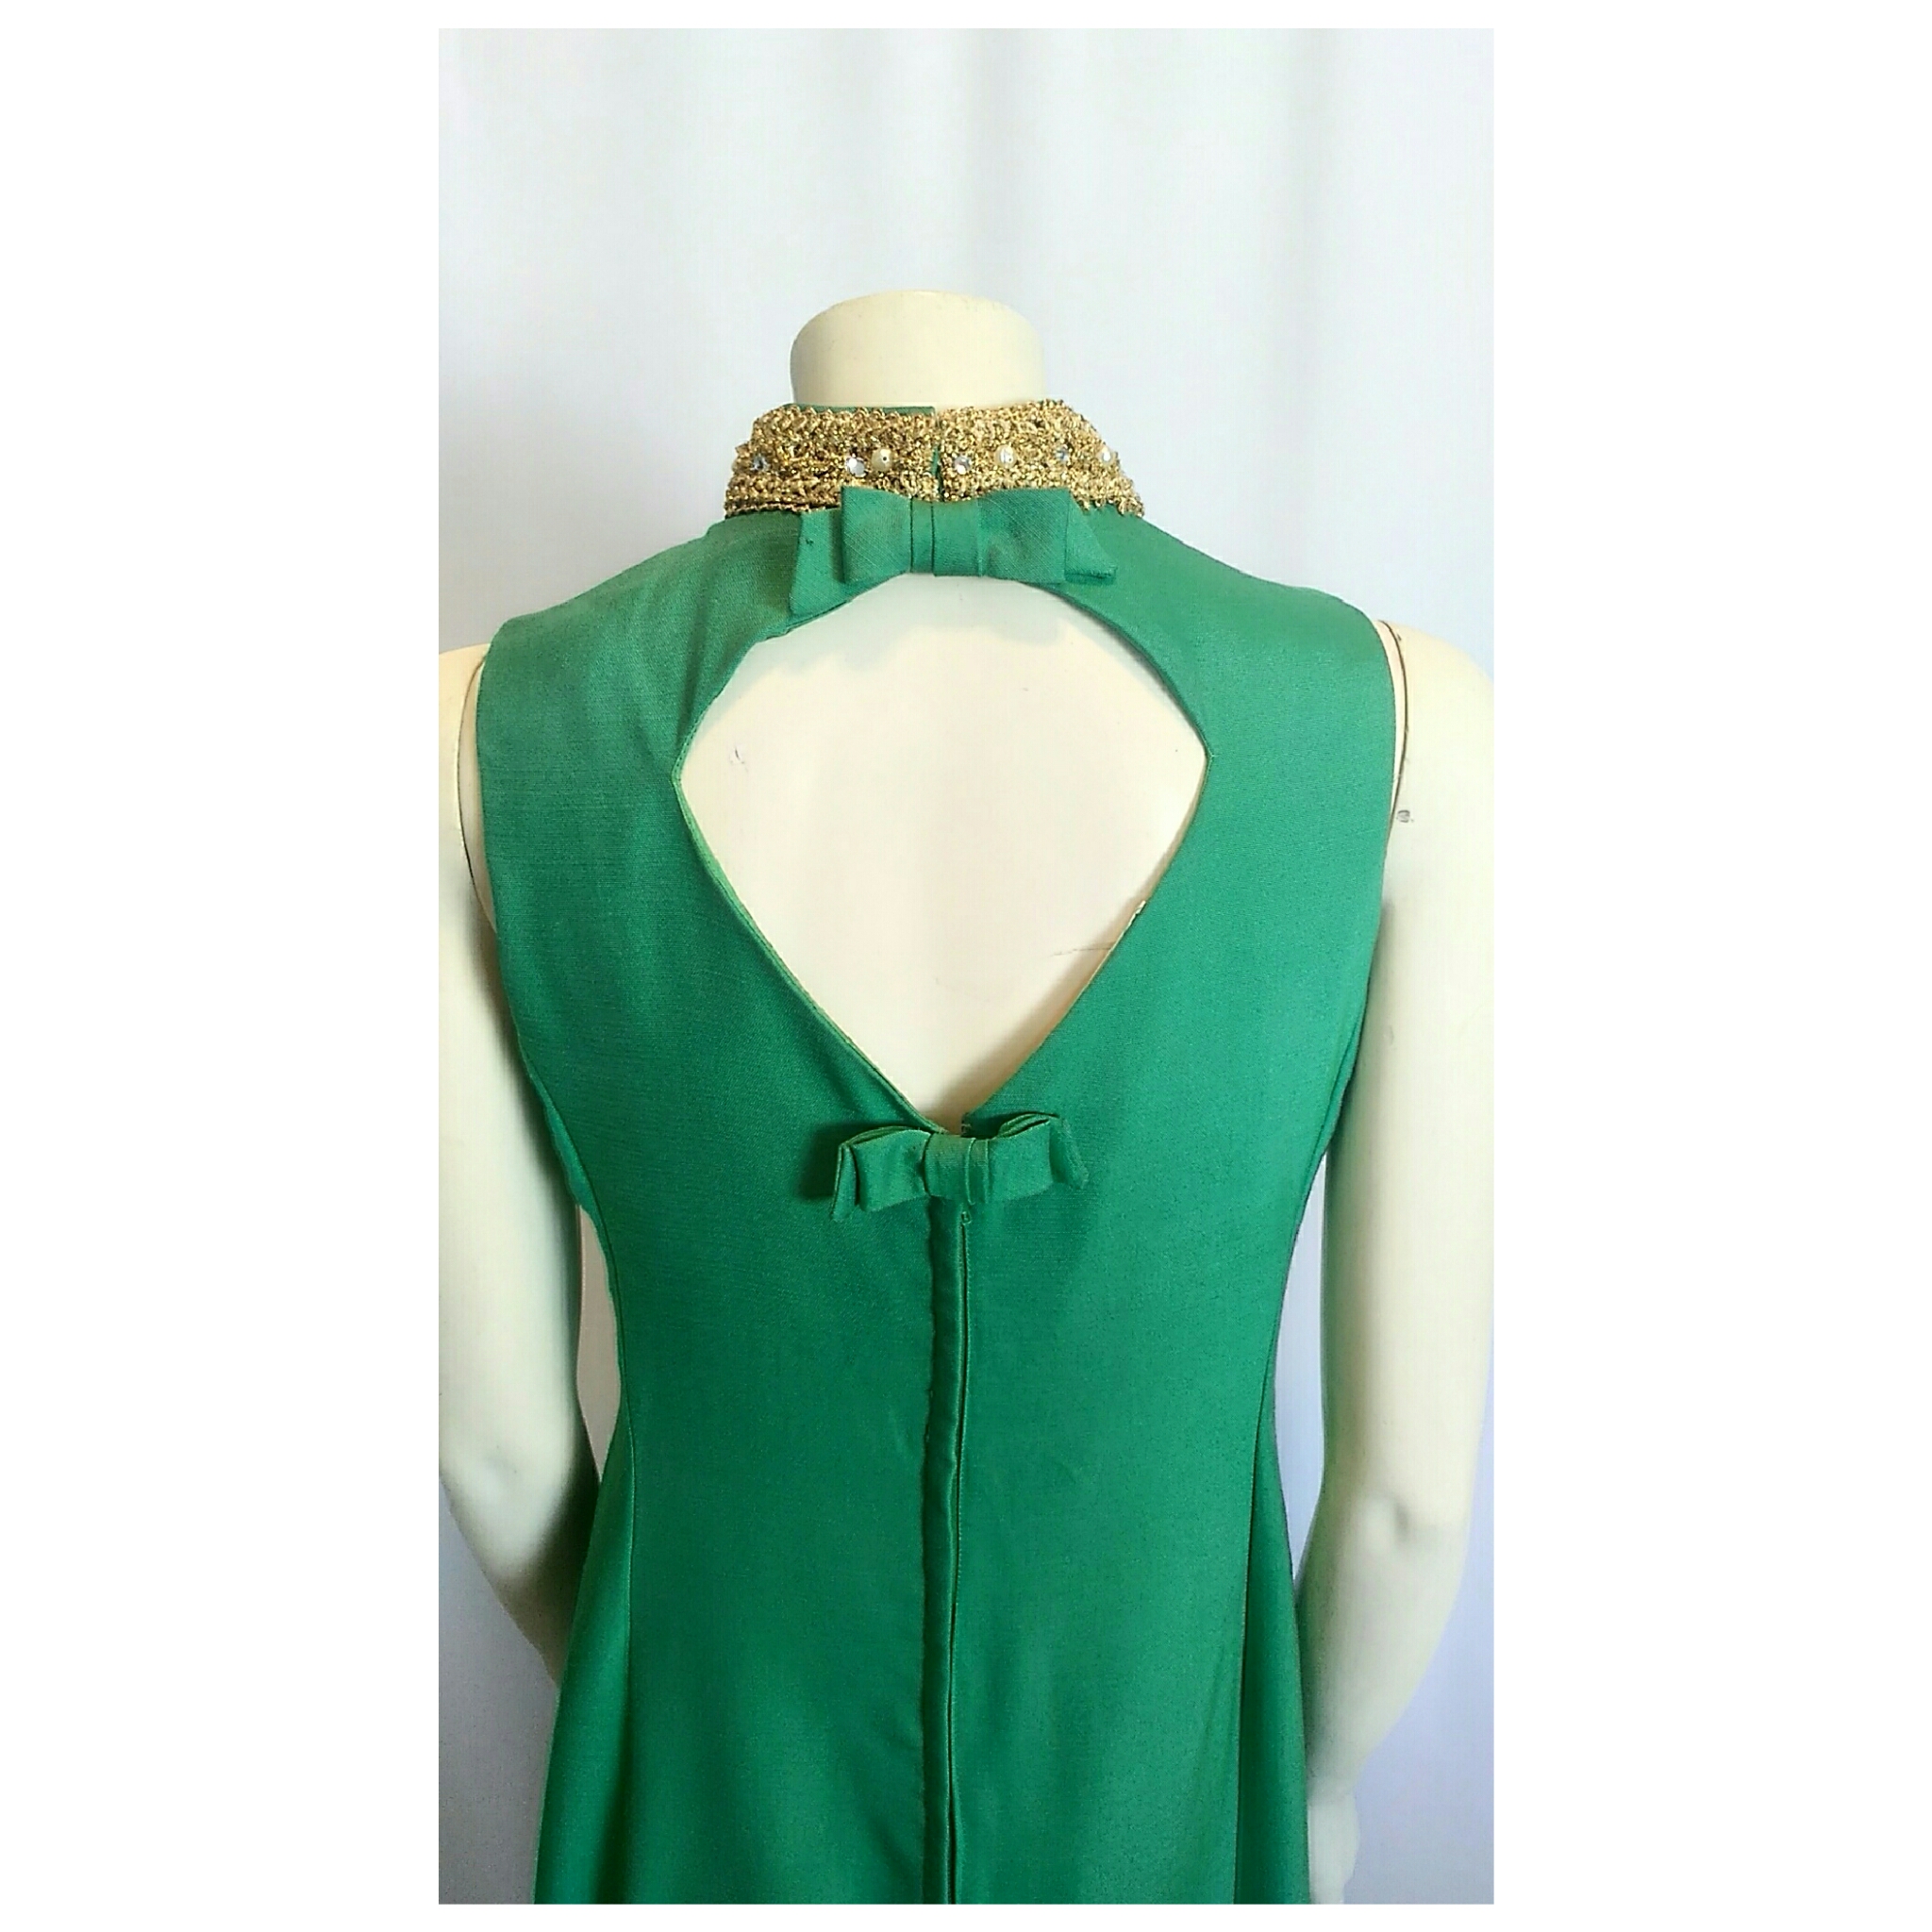 Vintage 1960’s Grass Green Christmas Sheath Dress by Date-Maker Formals